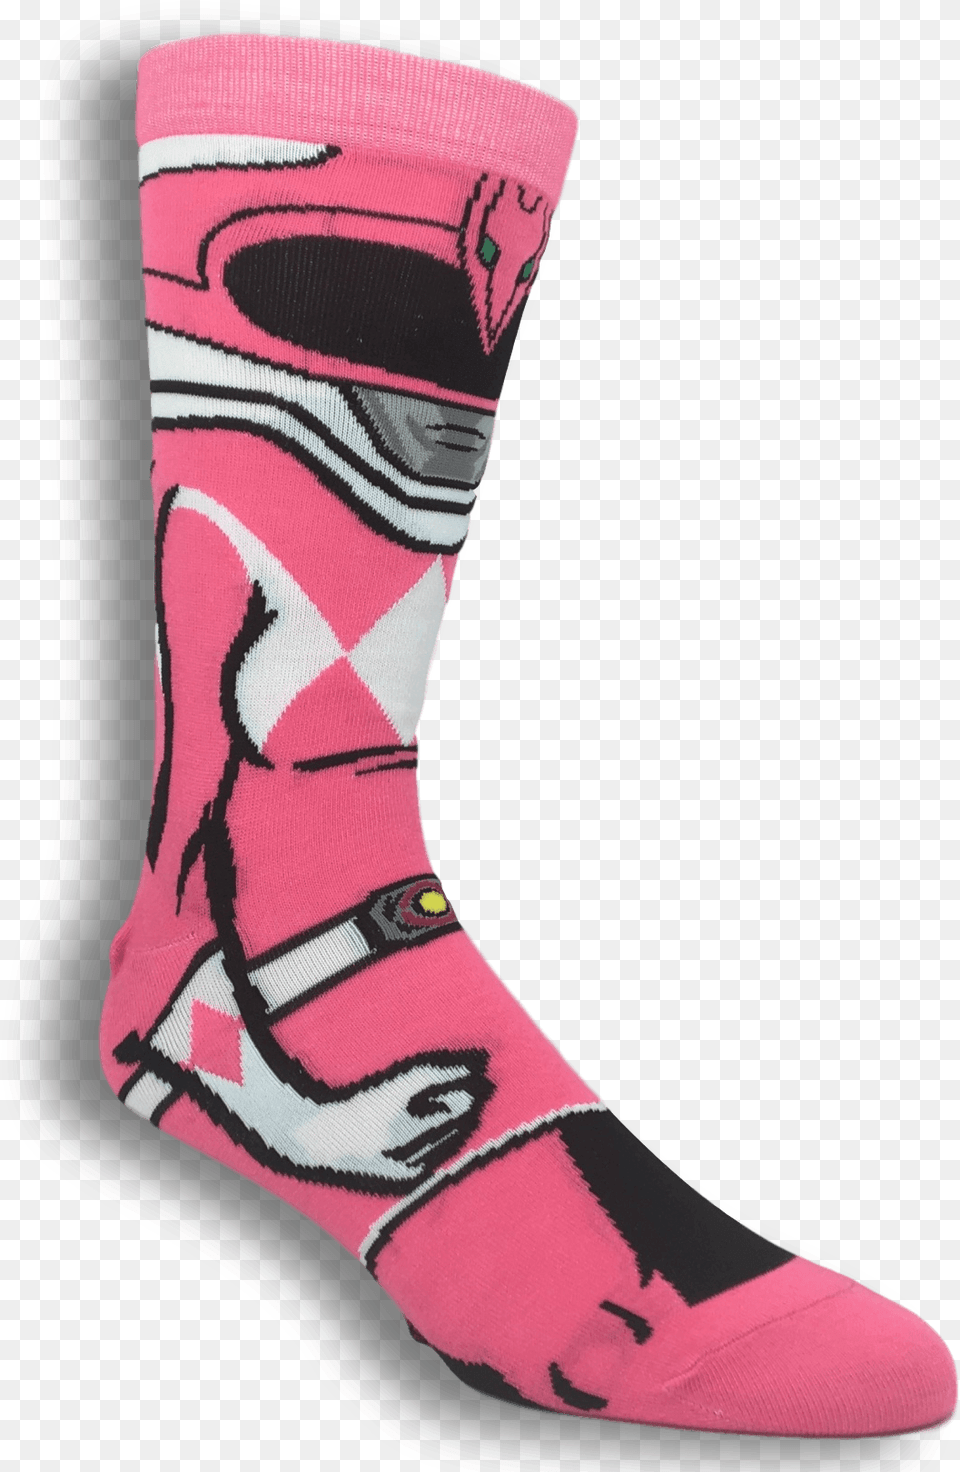 Power Rangers Pink Ranger 360 Socks Sock, Clothing, Hosiery, Person Png Image